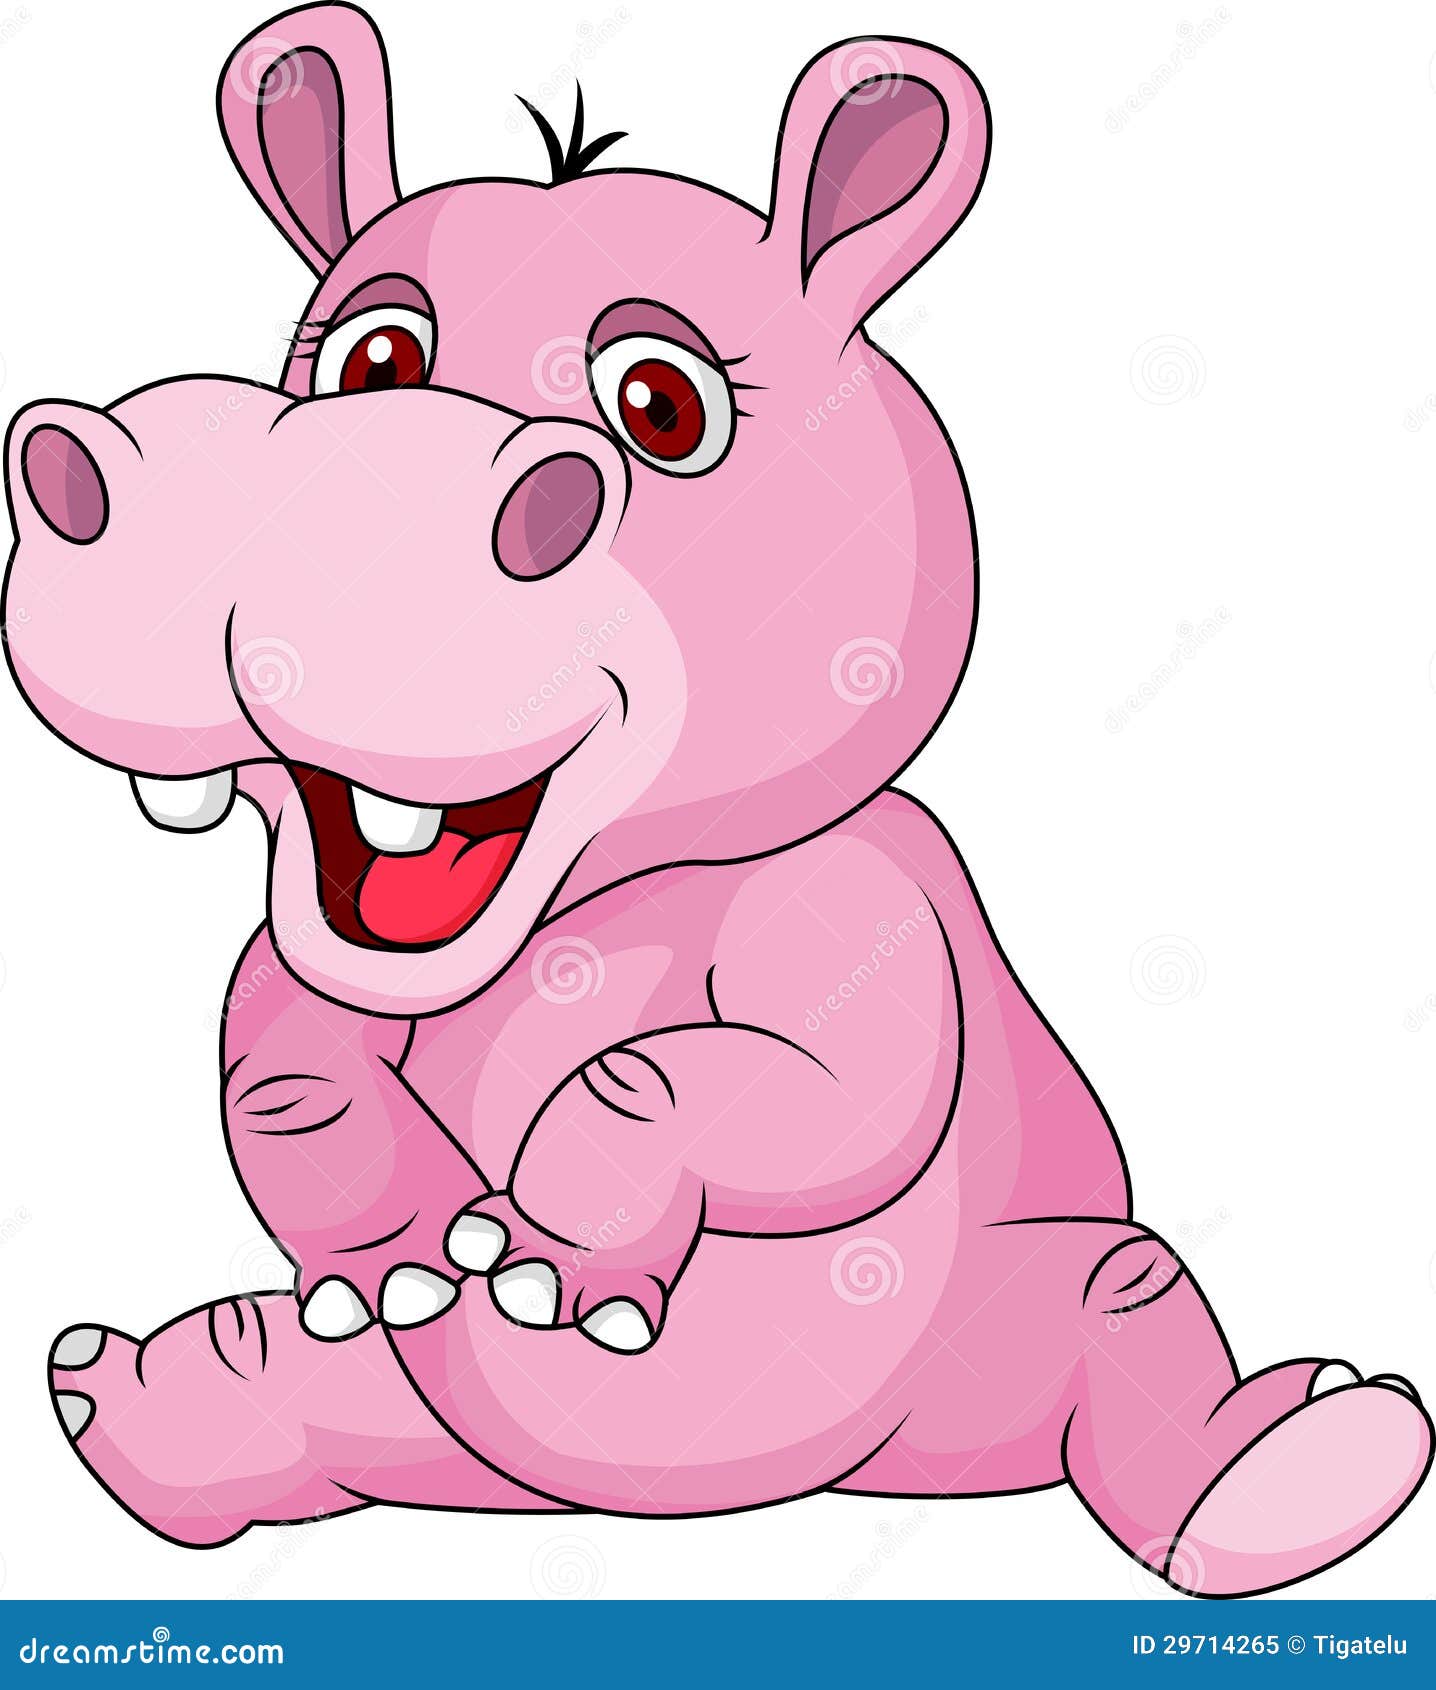 Funny hippo cartoon stock vector. Illustration of drawing - 29714265